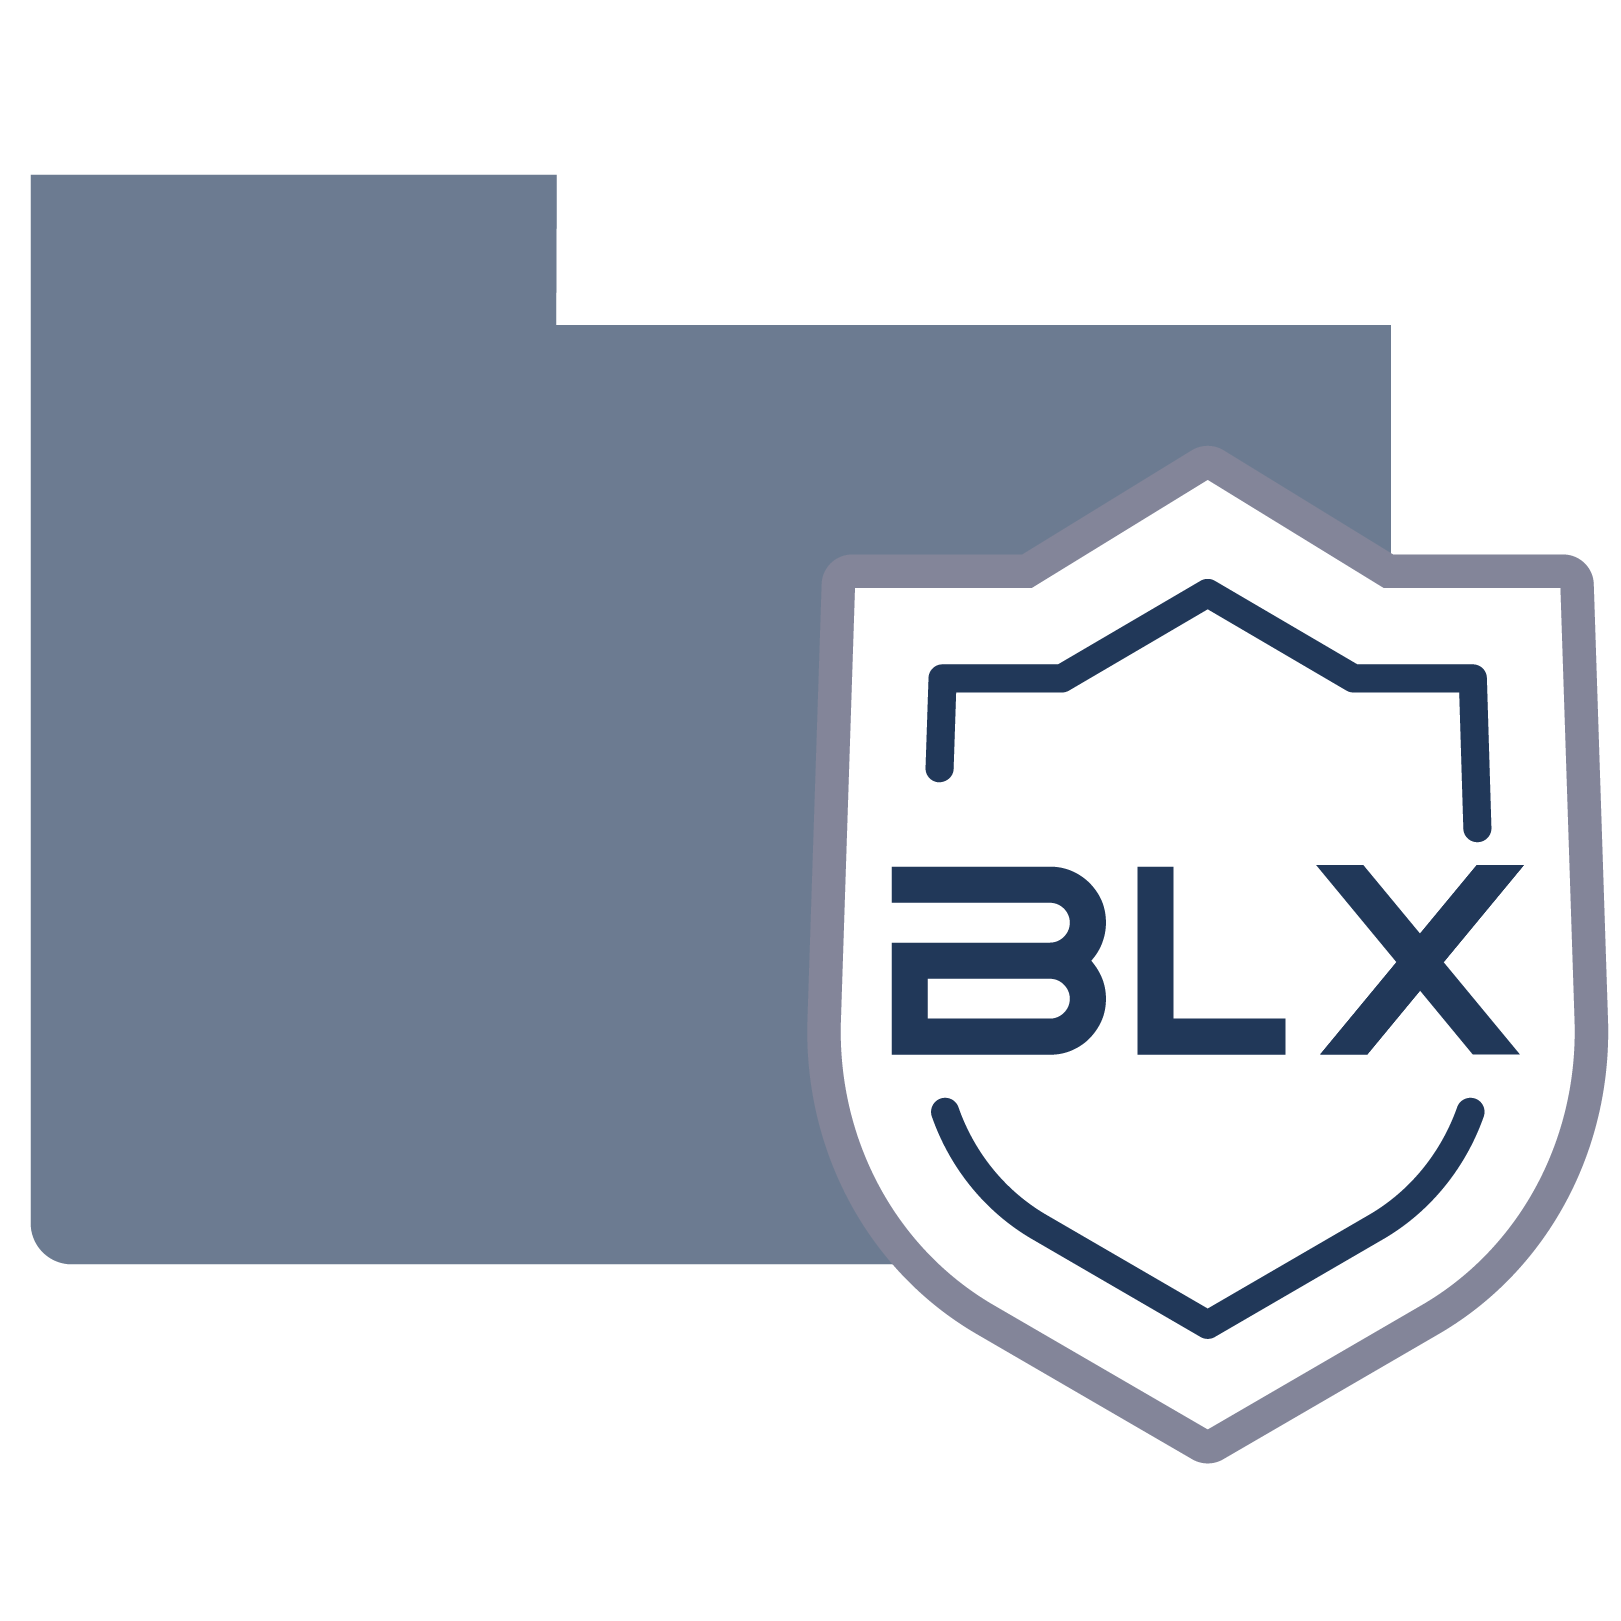 BLX Guard Patrol Monitoring System